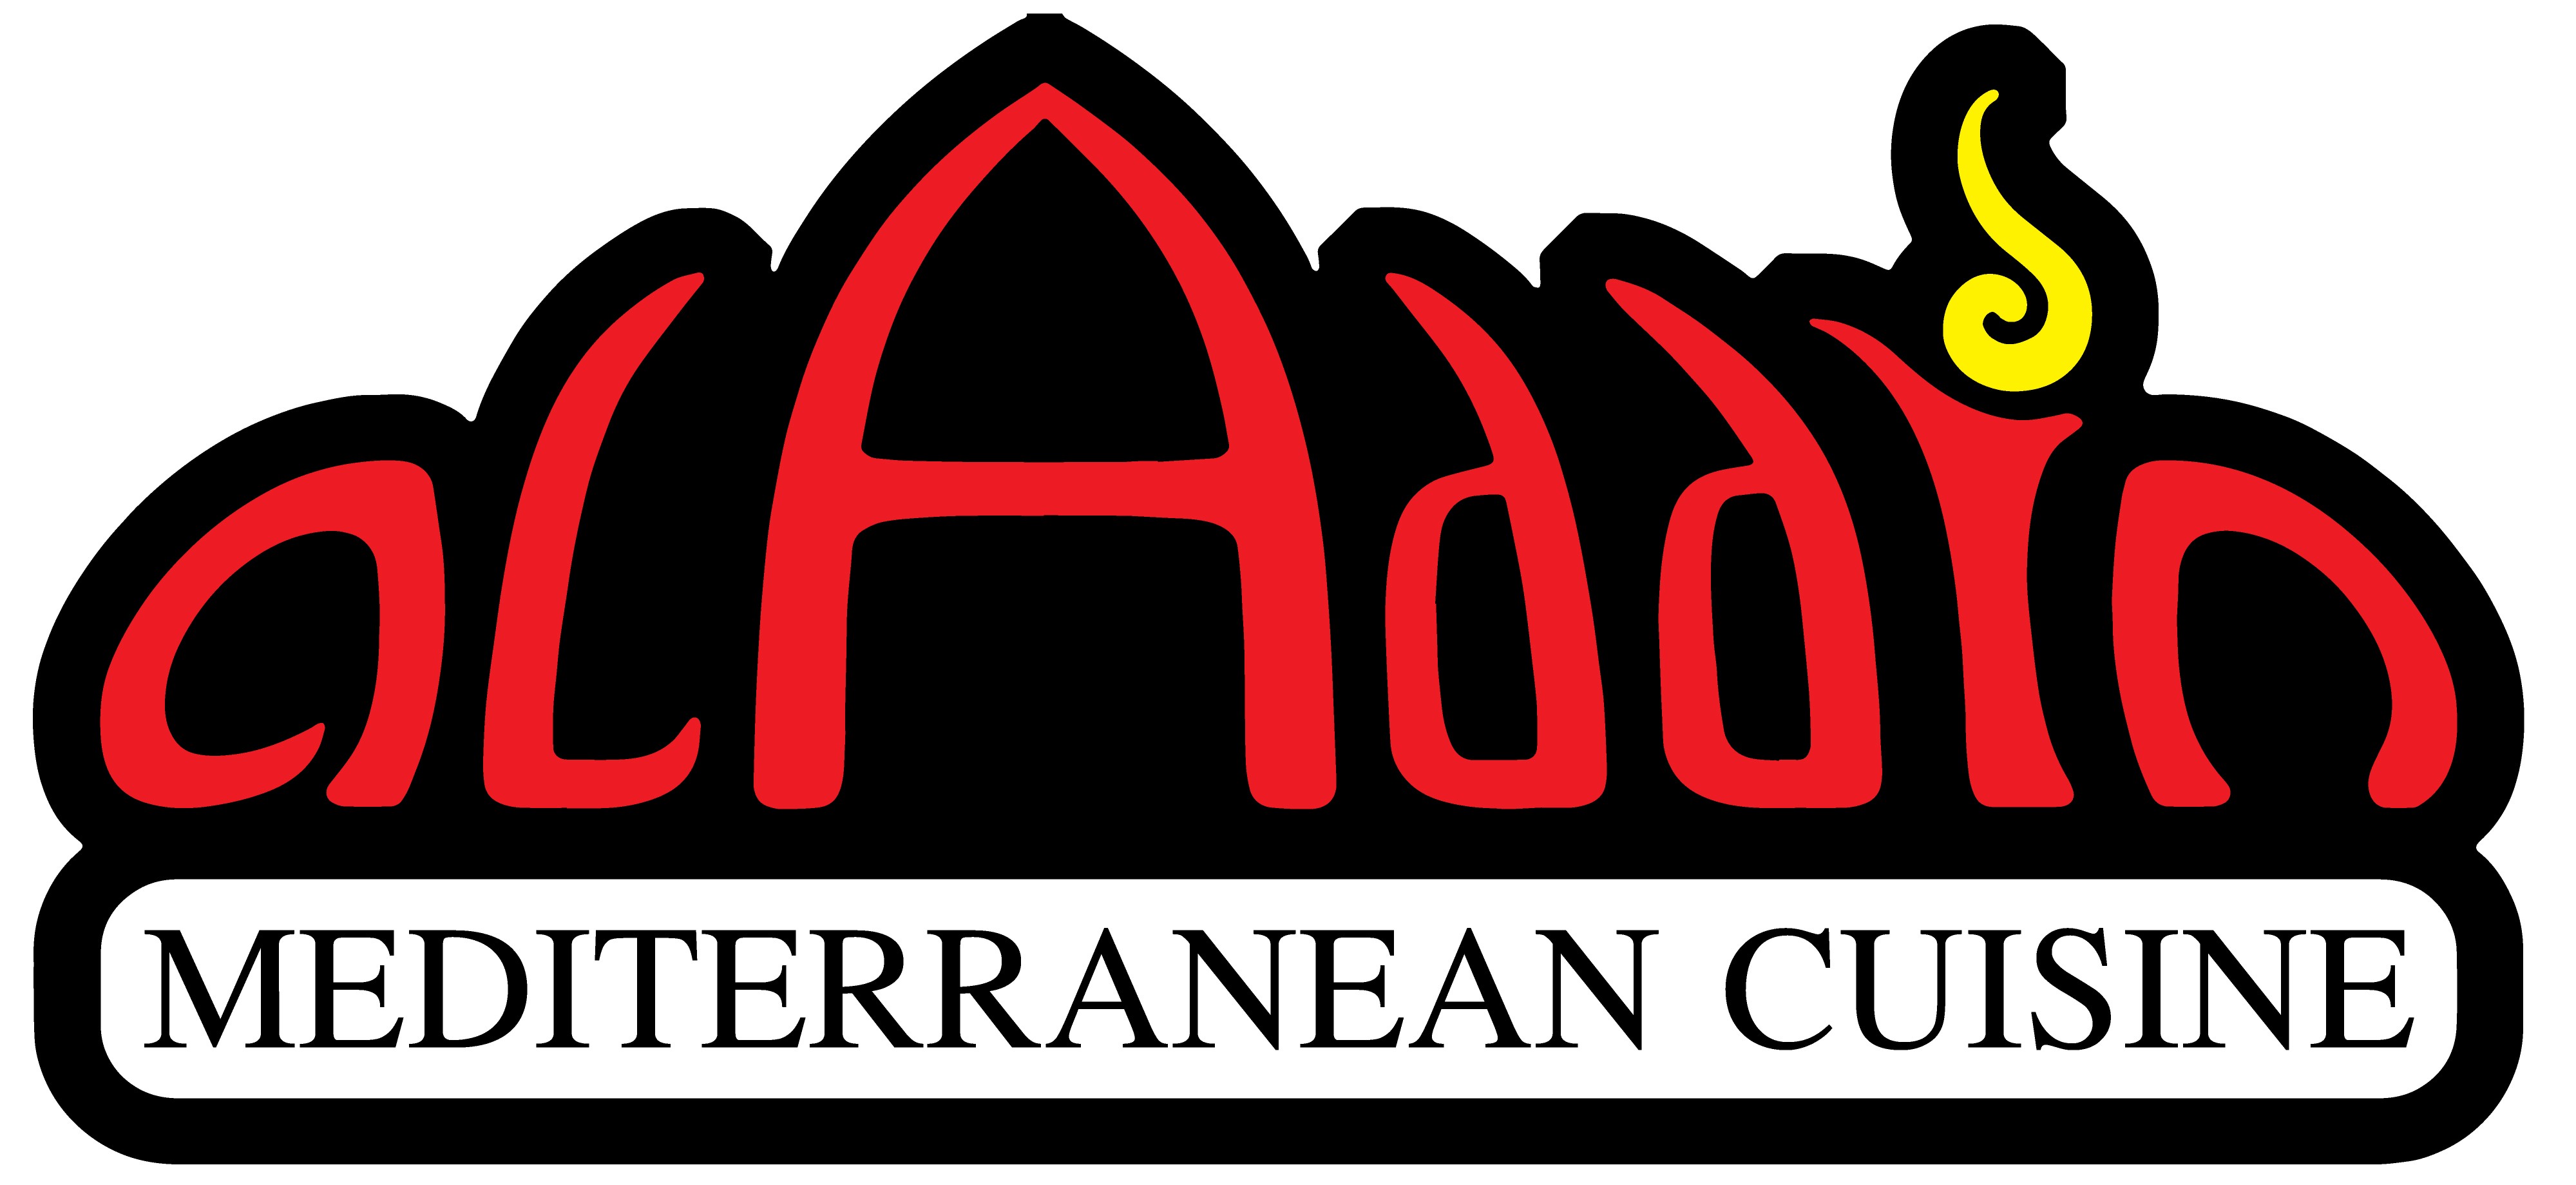 Aladdin Mediterranean Cuisine logo